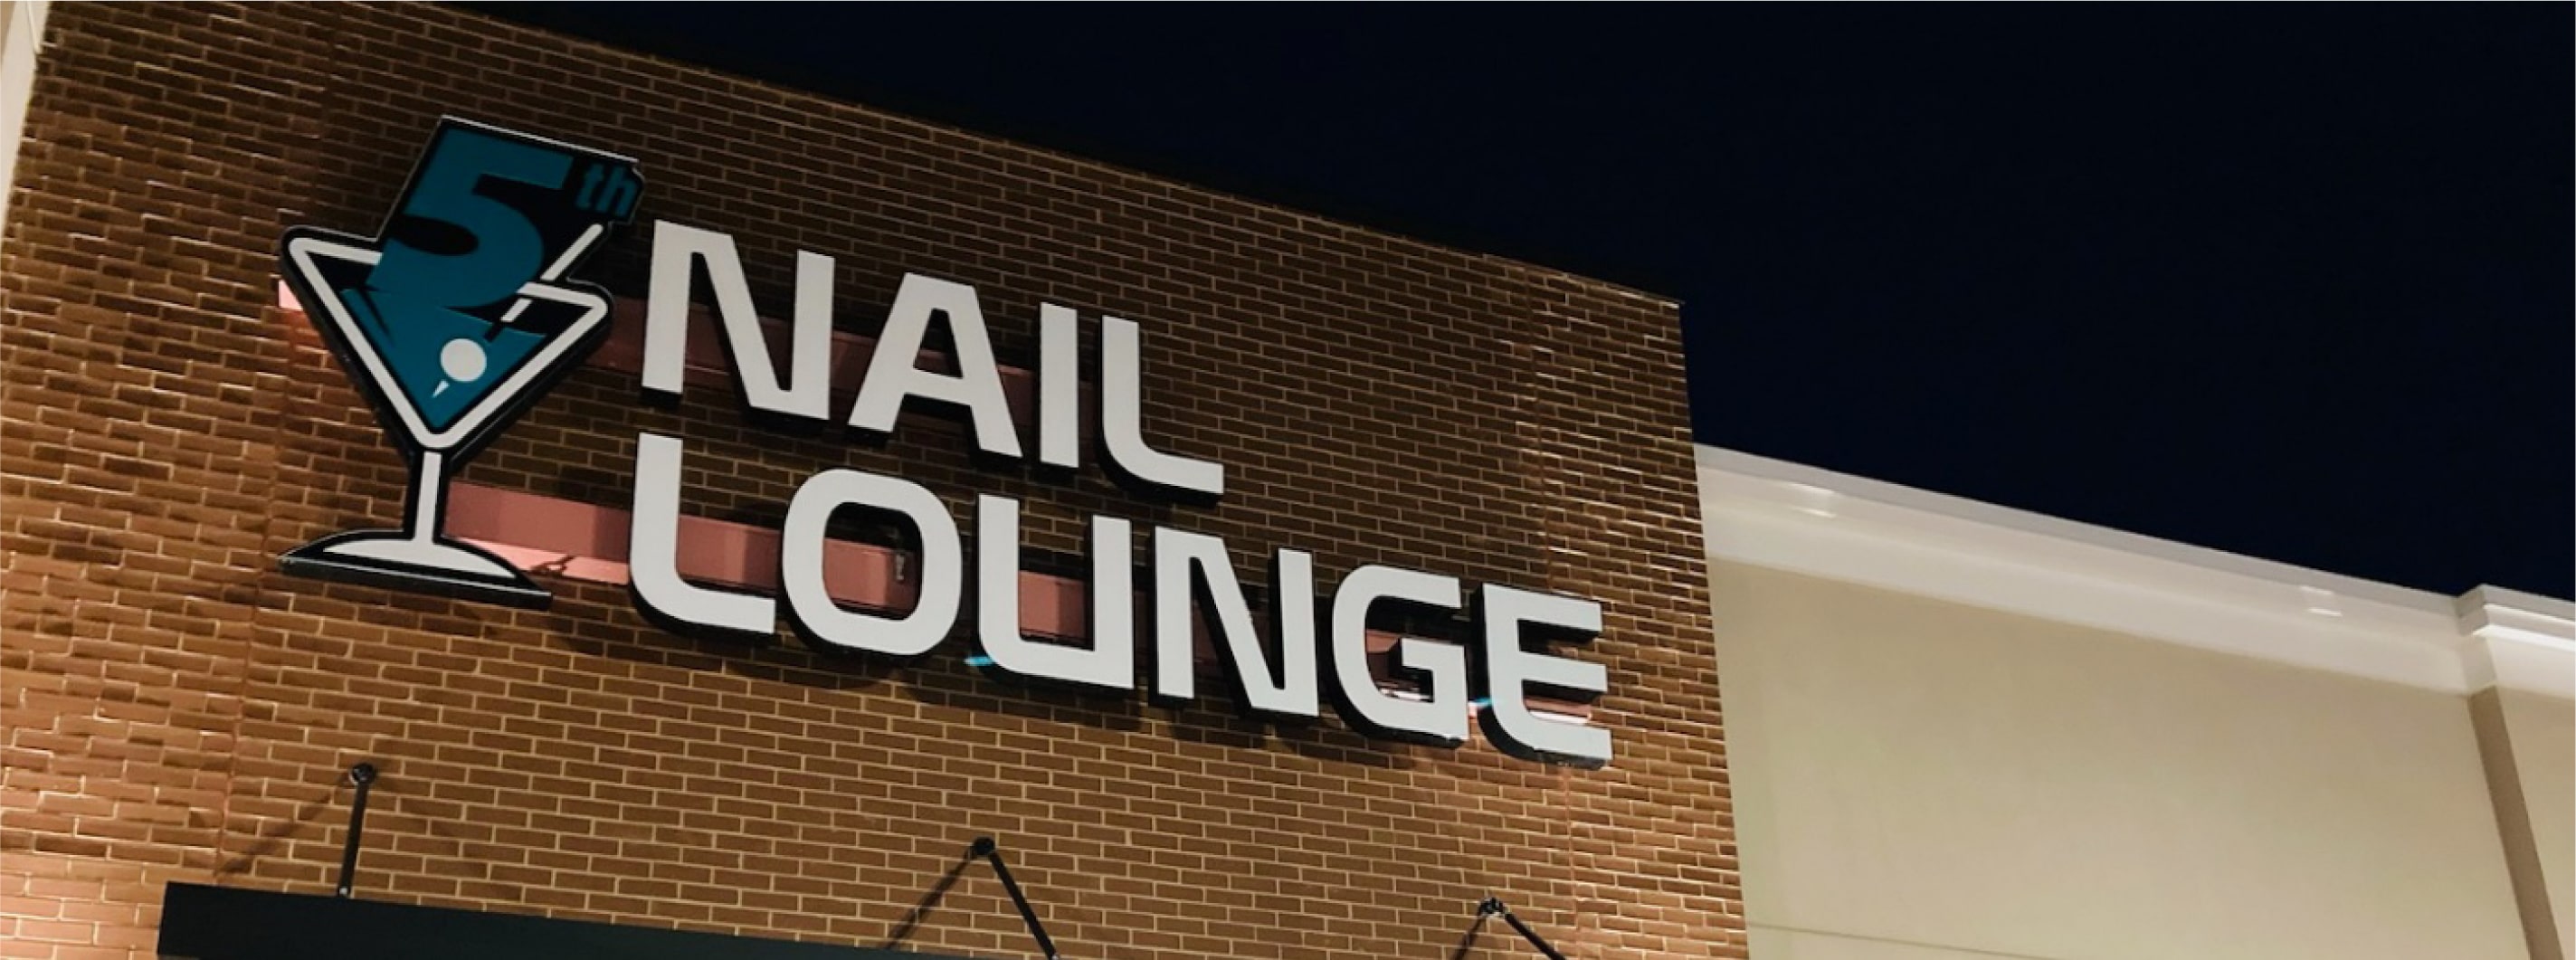 5th Nail Lounge 109 contact